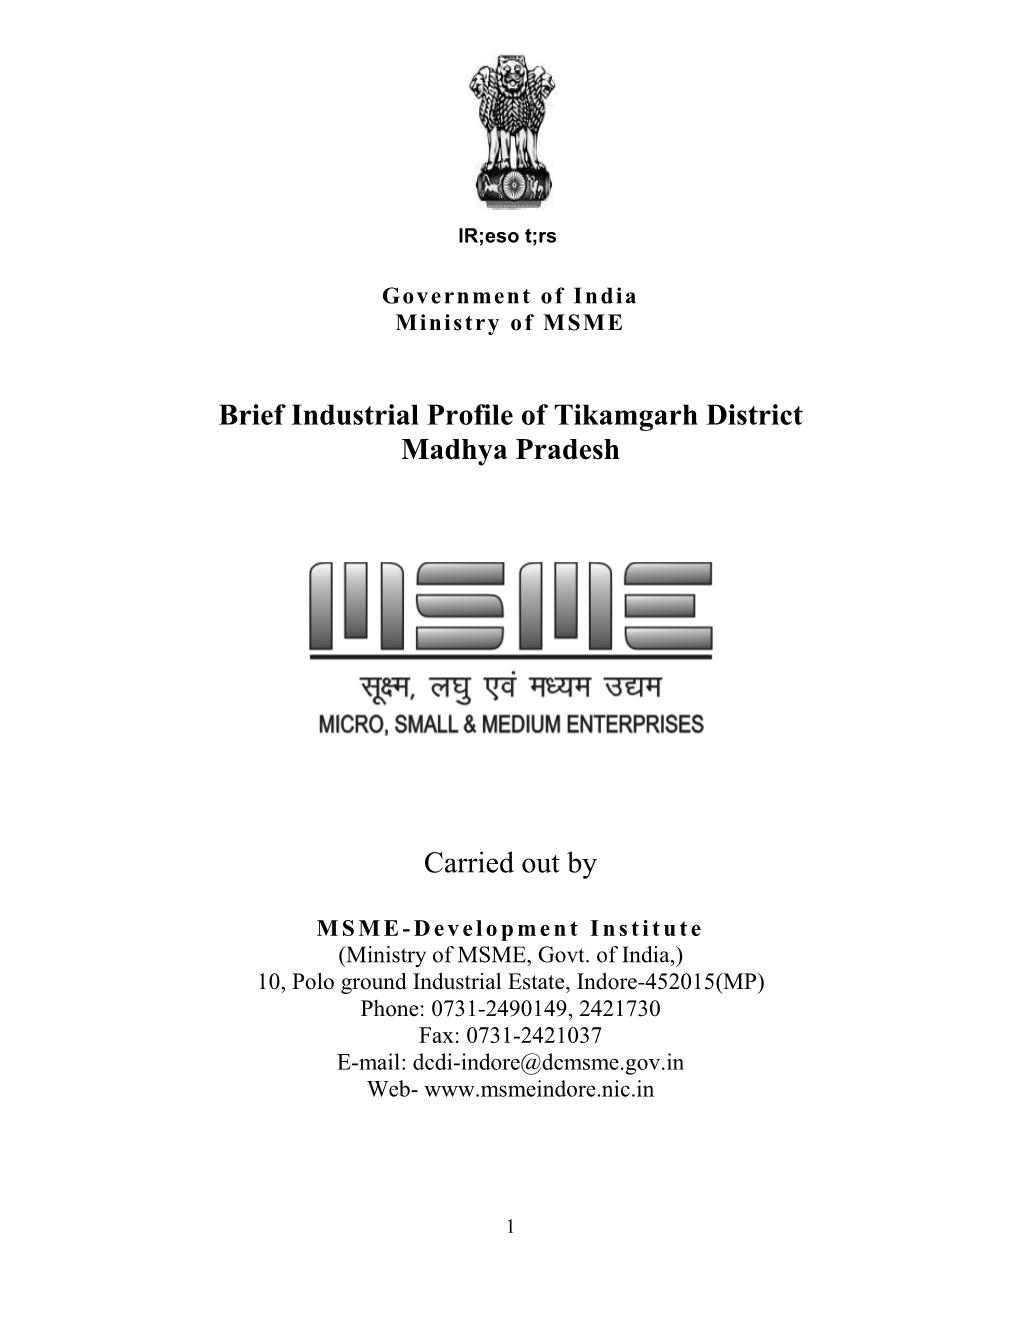 Brief Industrial Profile of Tikamgarh District Madhya Pradesh Carried